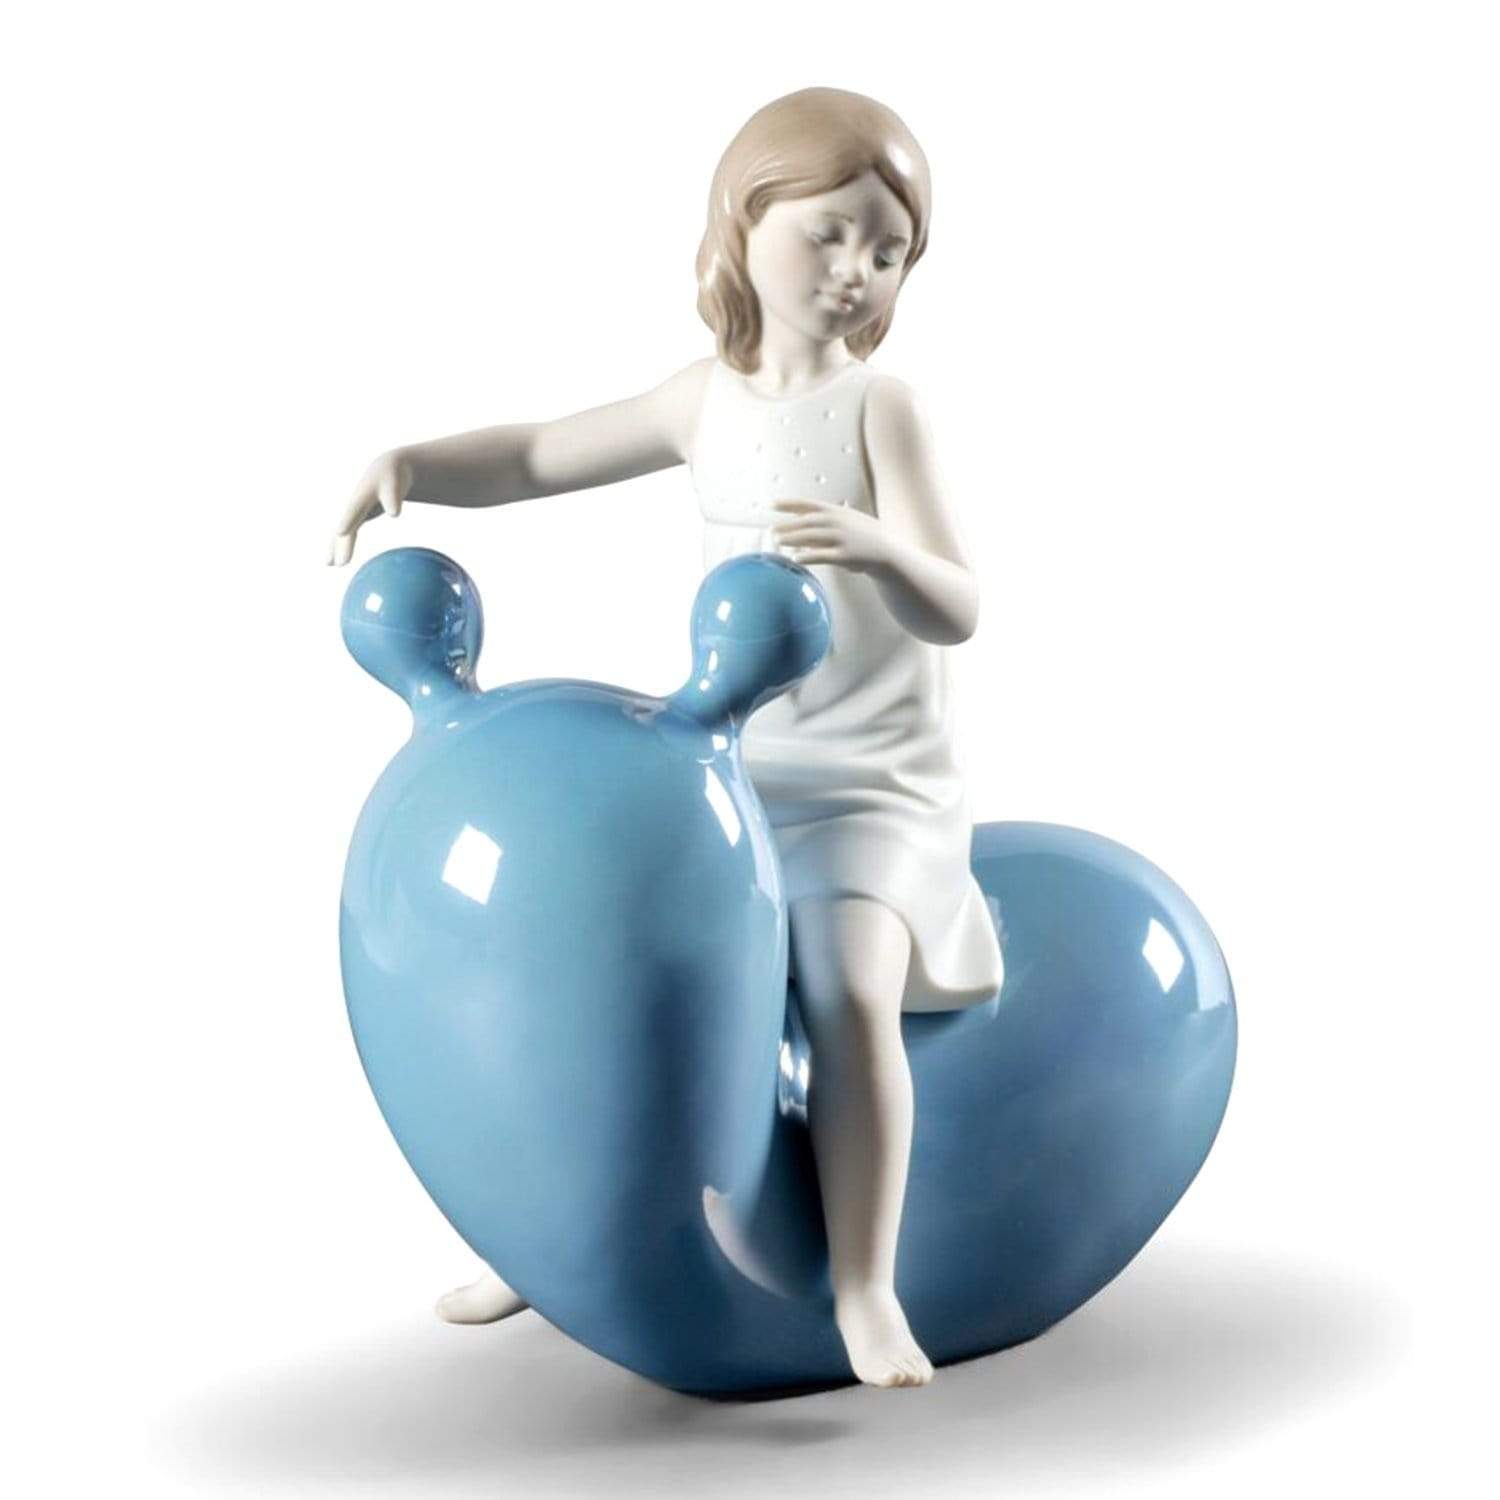 Lladro بلدي المنشار بالون فتاة التمثال - الأزرق والأبيض - 1009368 - Jashanmal الرئيسية